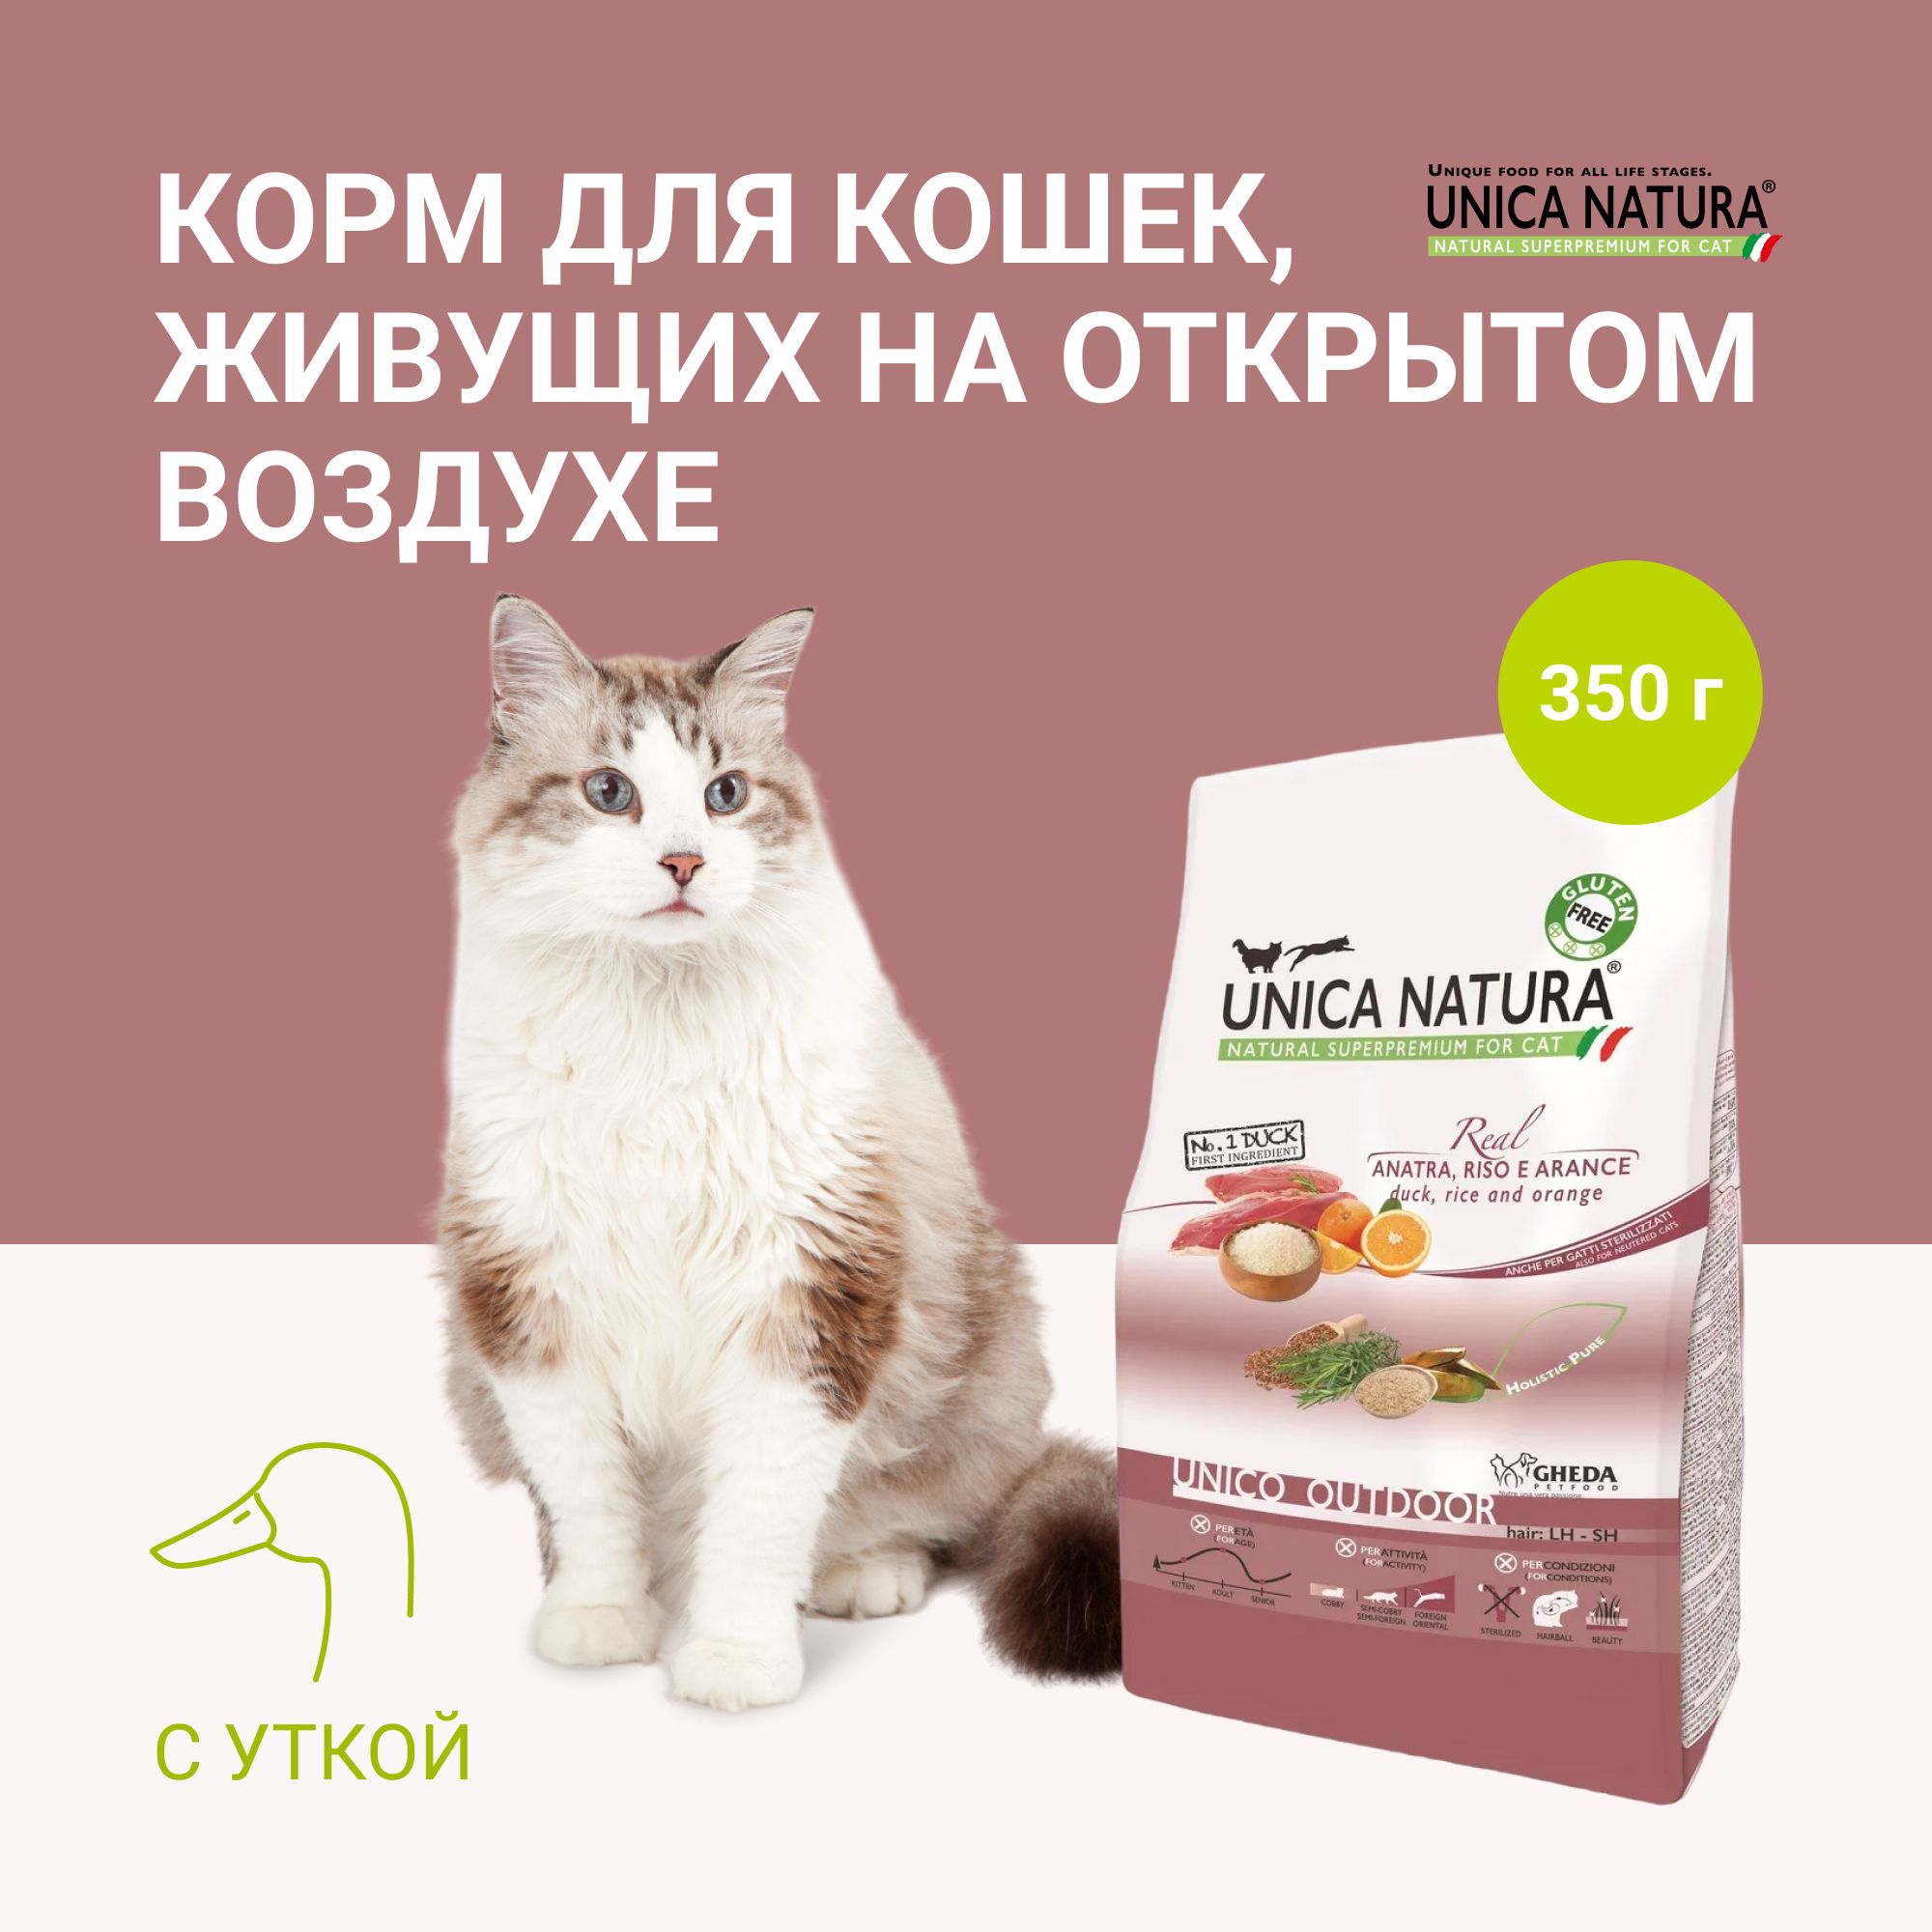 Unica Natura корм для кошек. Алма натура корм для кошек. Спектрум корм для Уника натура для кошек. Unica natura для кошек